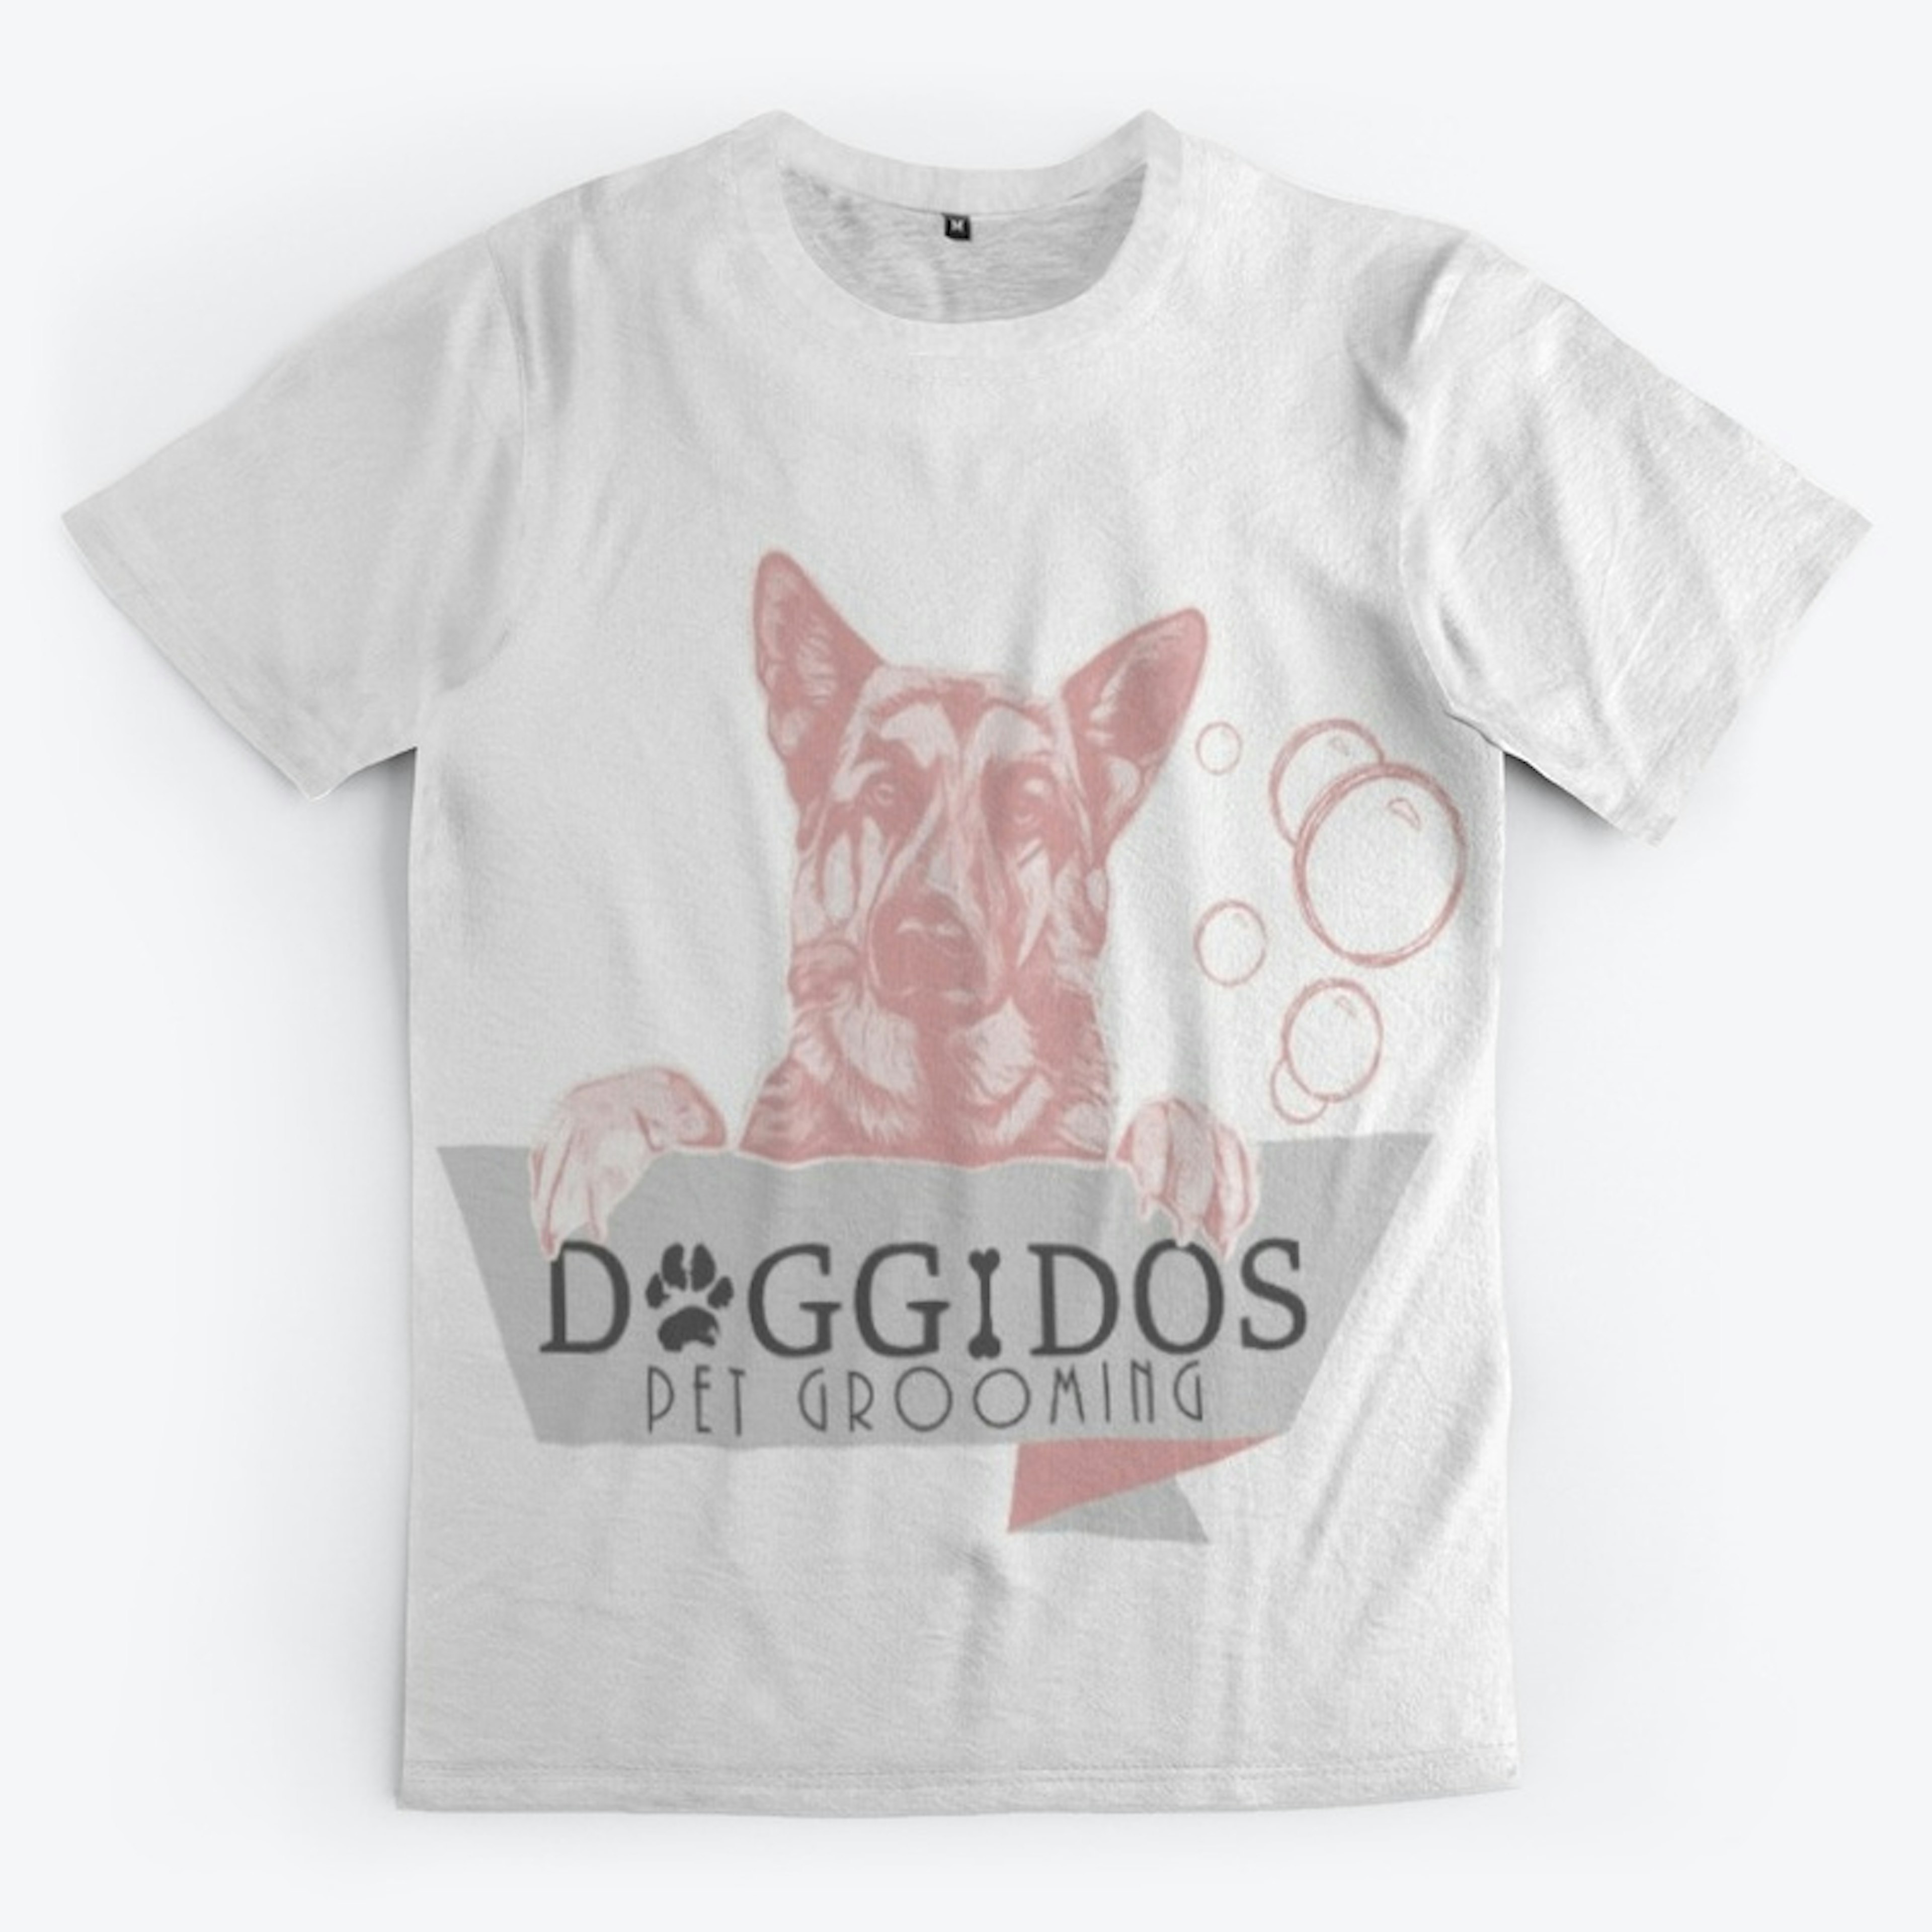 Doggidos Graphic Tee 5